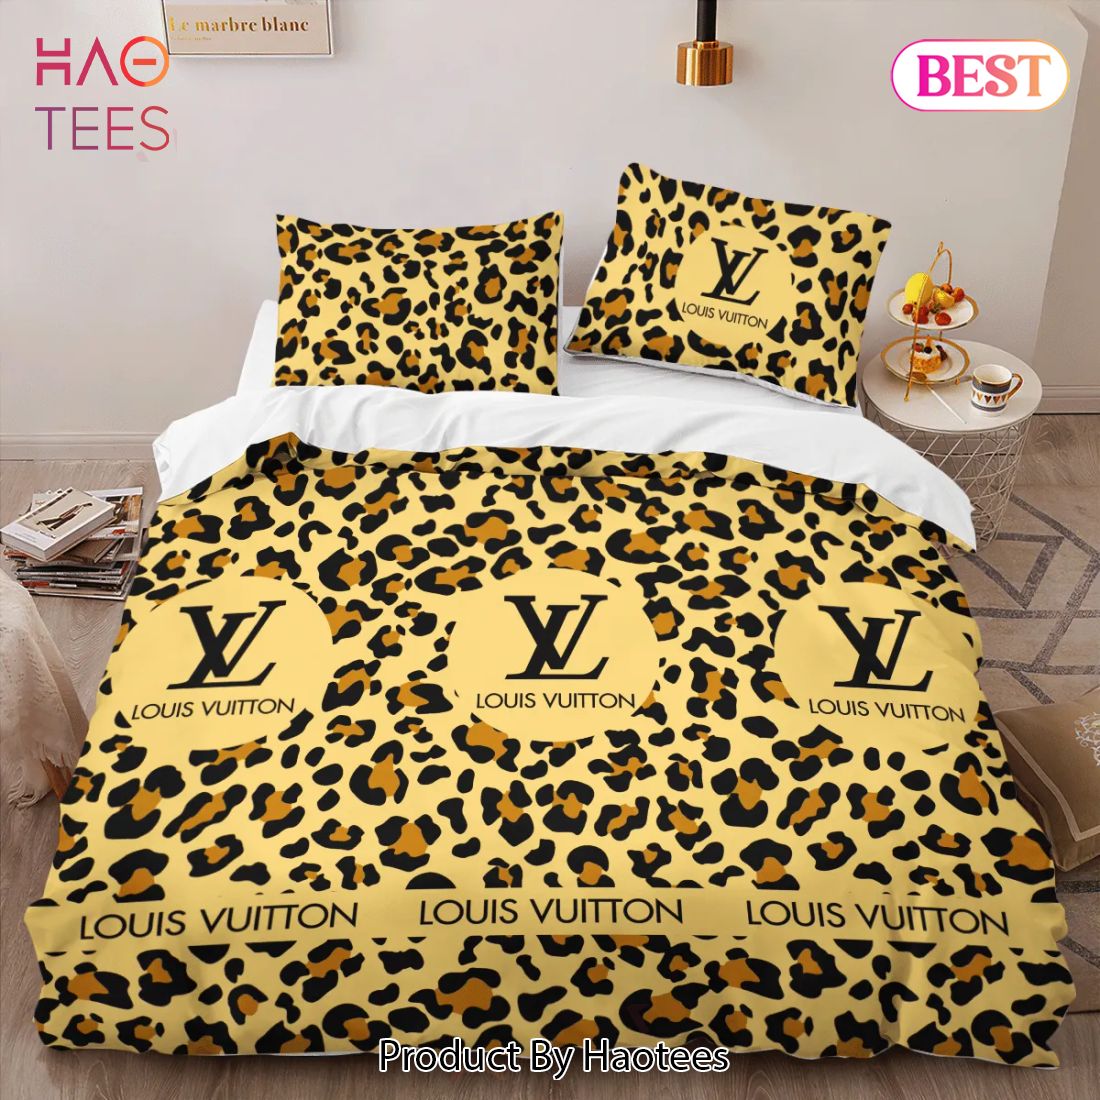 SALE] Louis Vuitton Yellow Limited Edition Luxury Brand Bedding Set  Bedspread Duvet Cover Set Home Decor